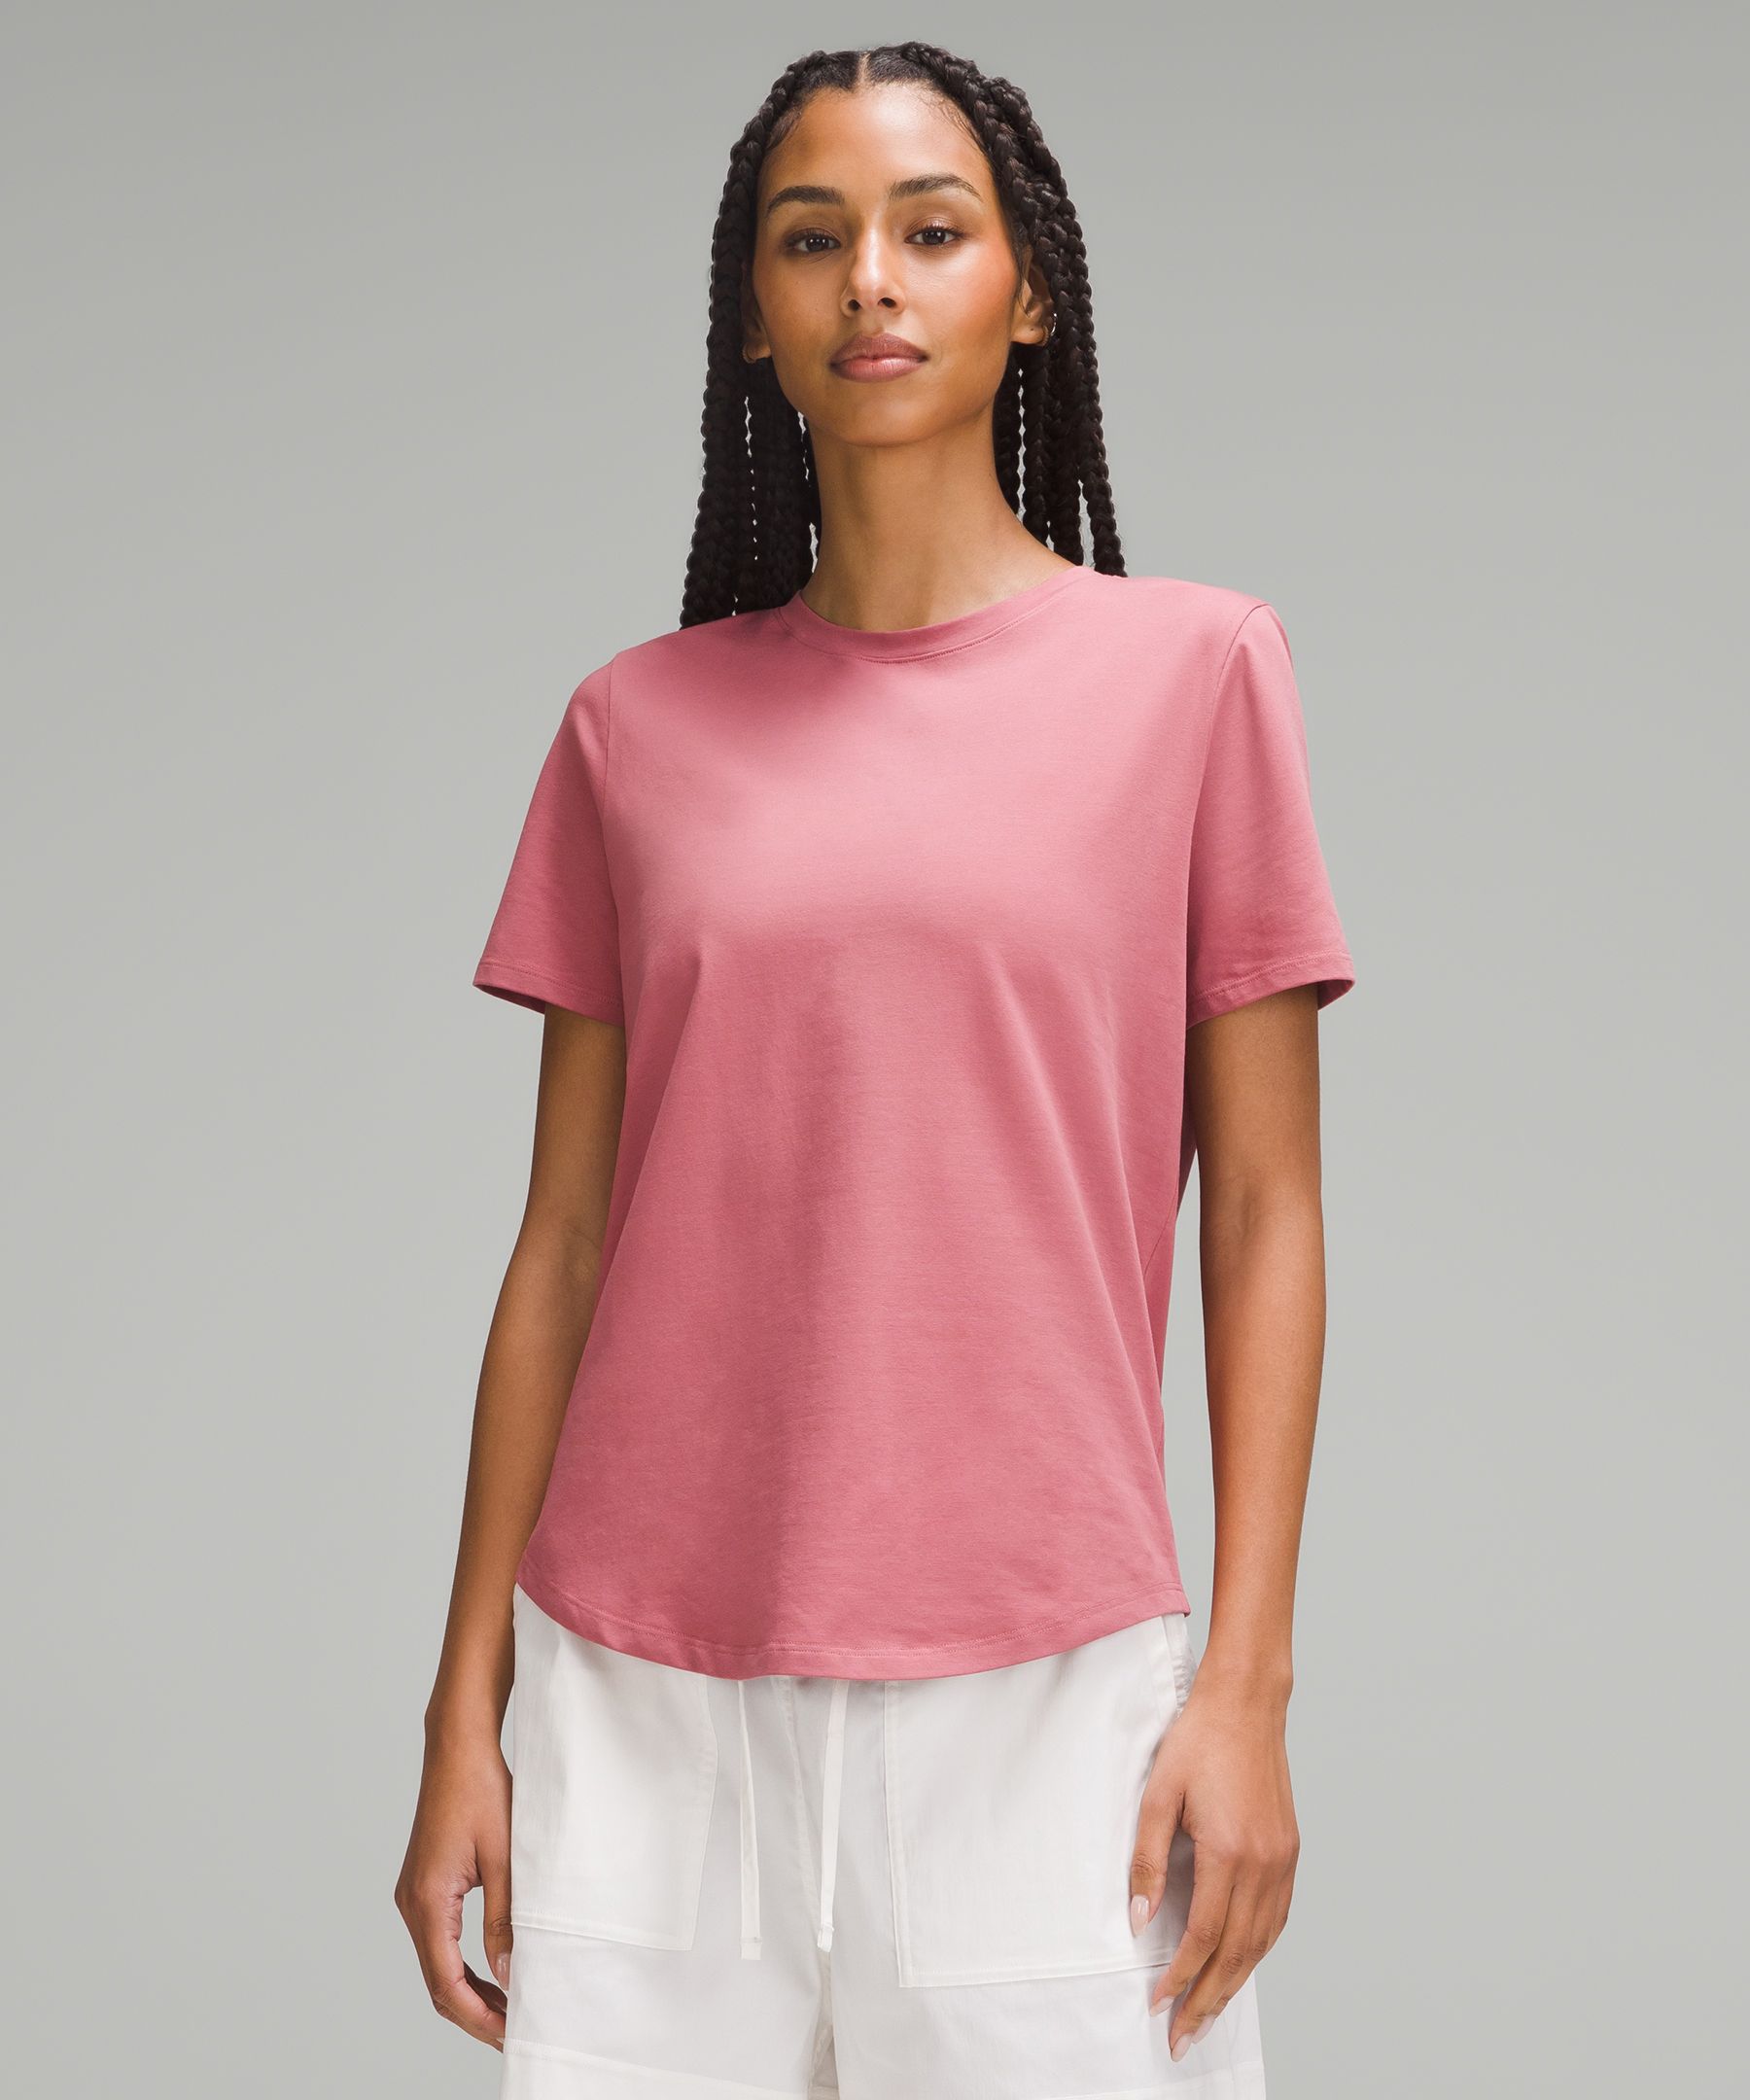 ENTI Women Tie Dye Shirt Round Neck 3/4 Sleeves in Pink at